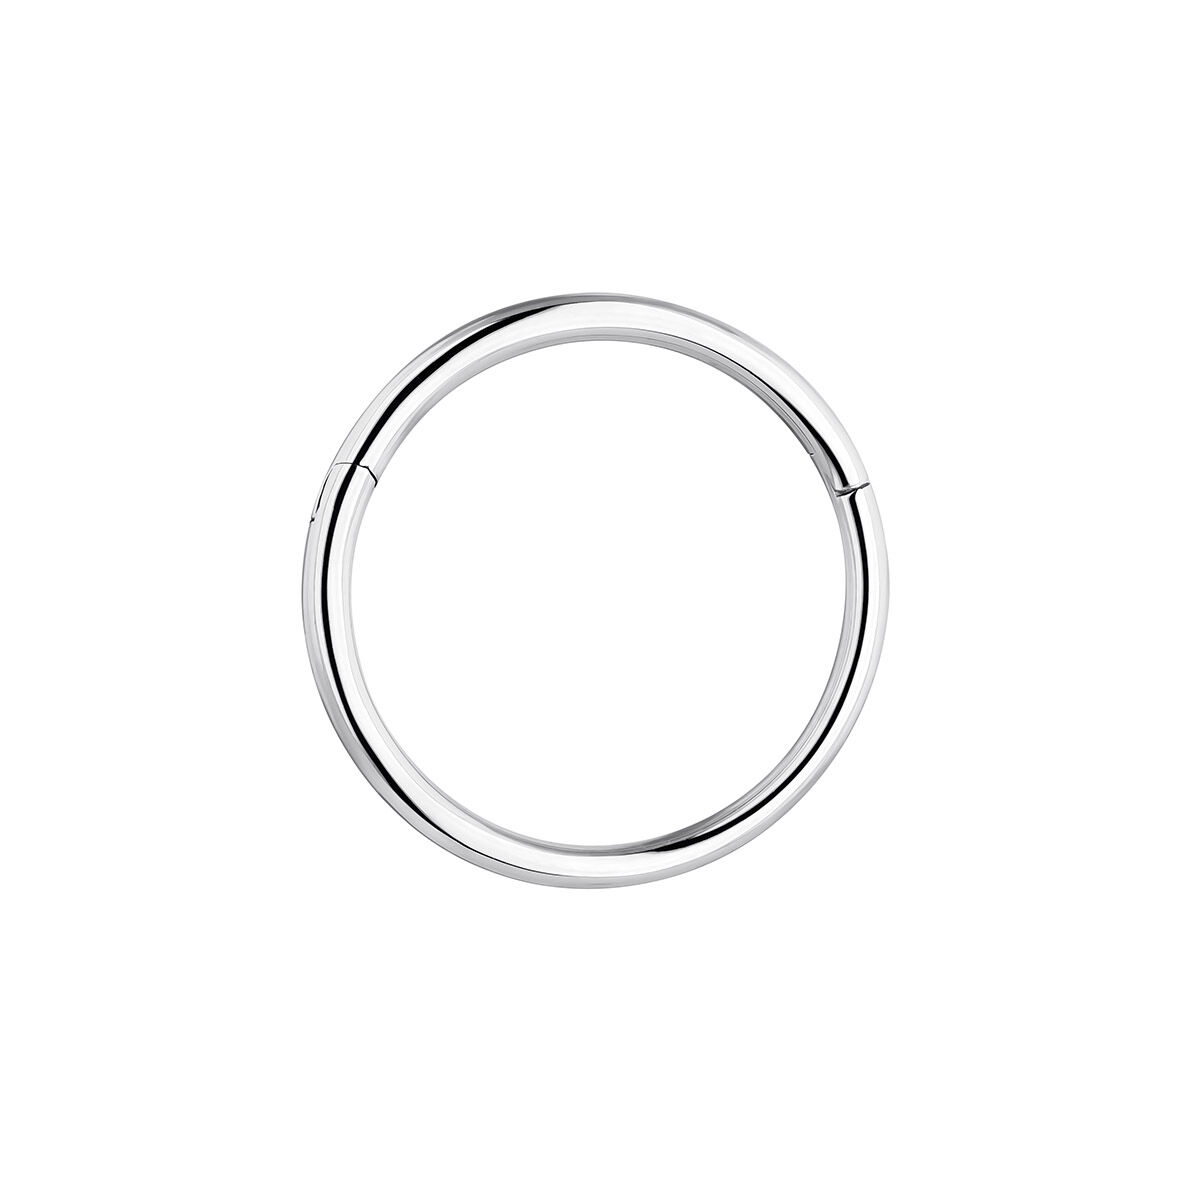 Single 9kt white gold small hoop earring, J05128-01-H, hi-res